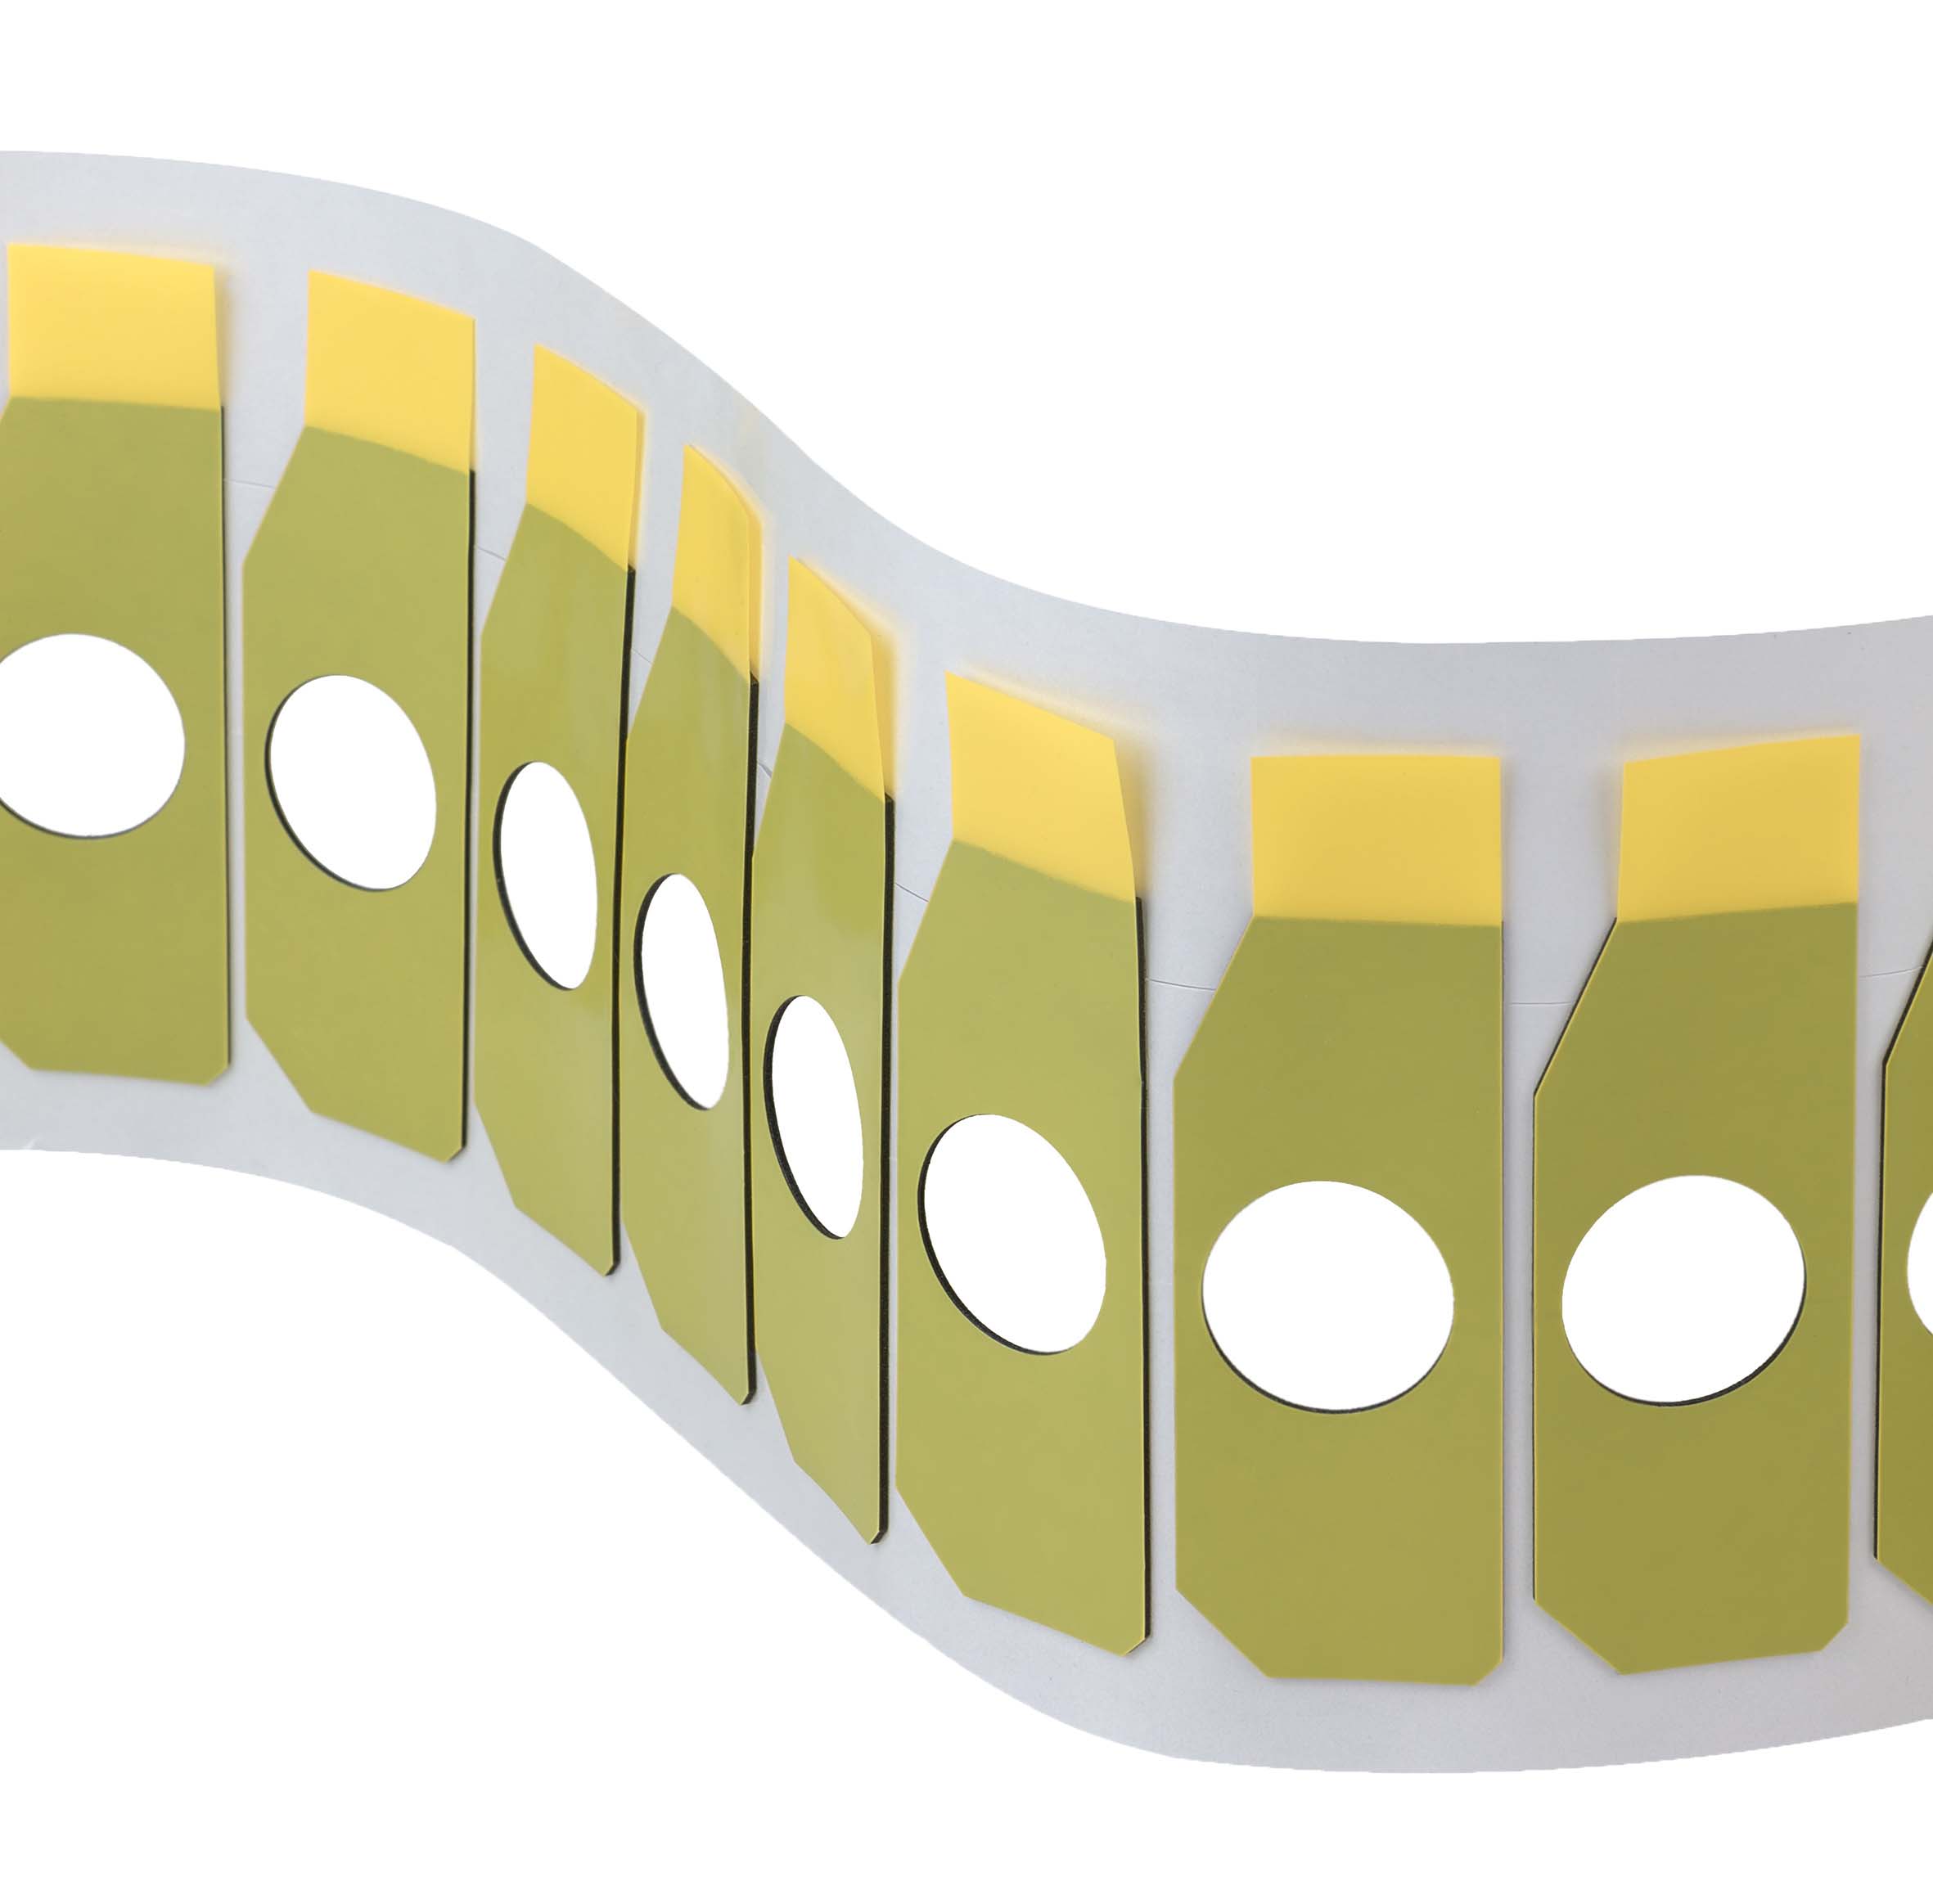 <ul><li>Gergonne double-sided adhesive tape for mounting sensors or rear view cameras</li></ul>